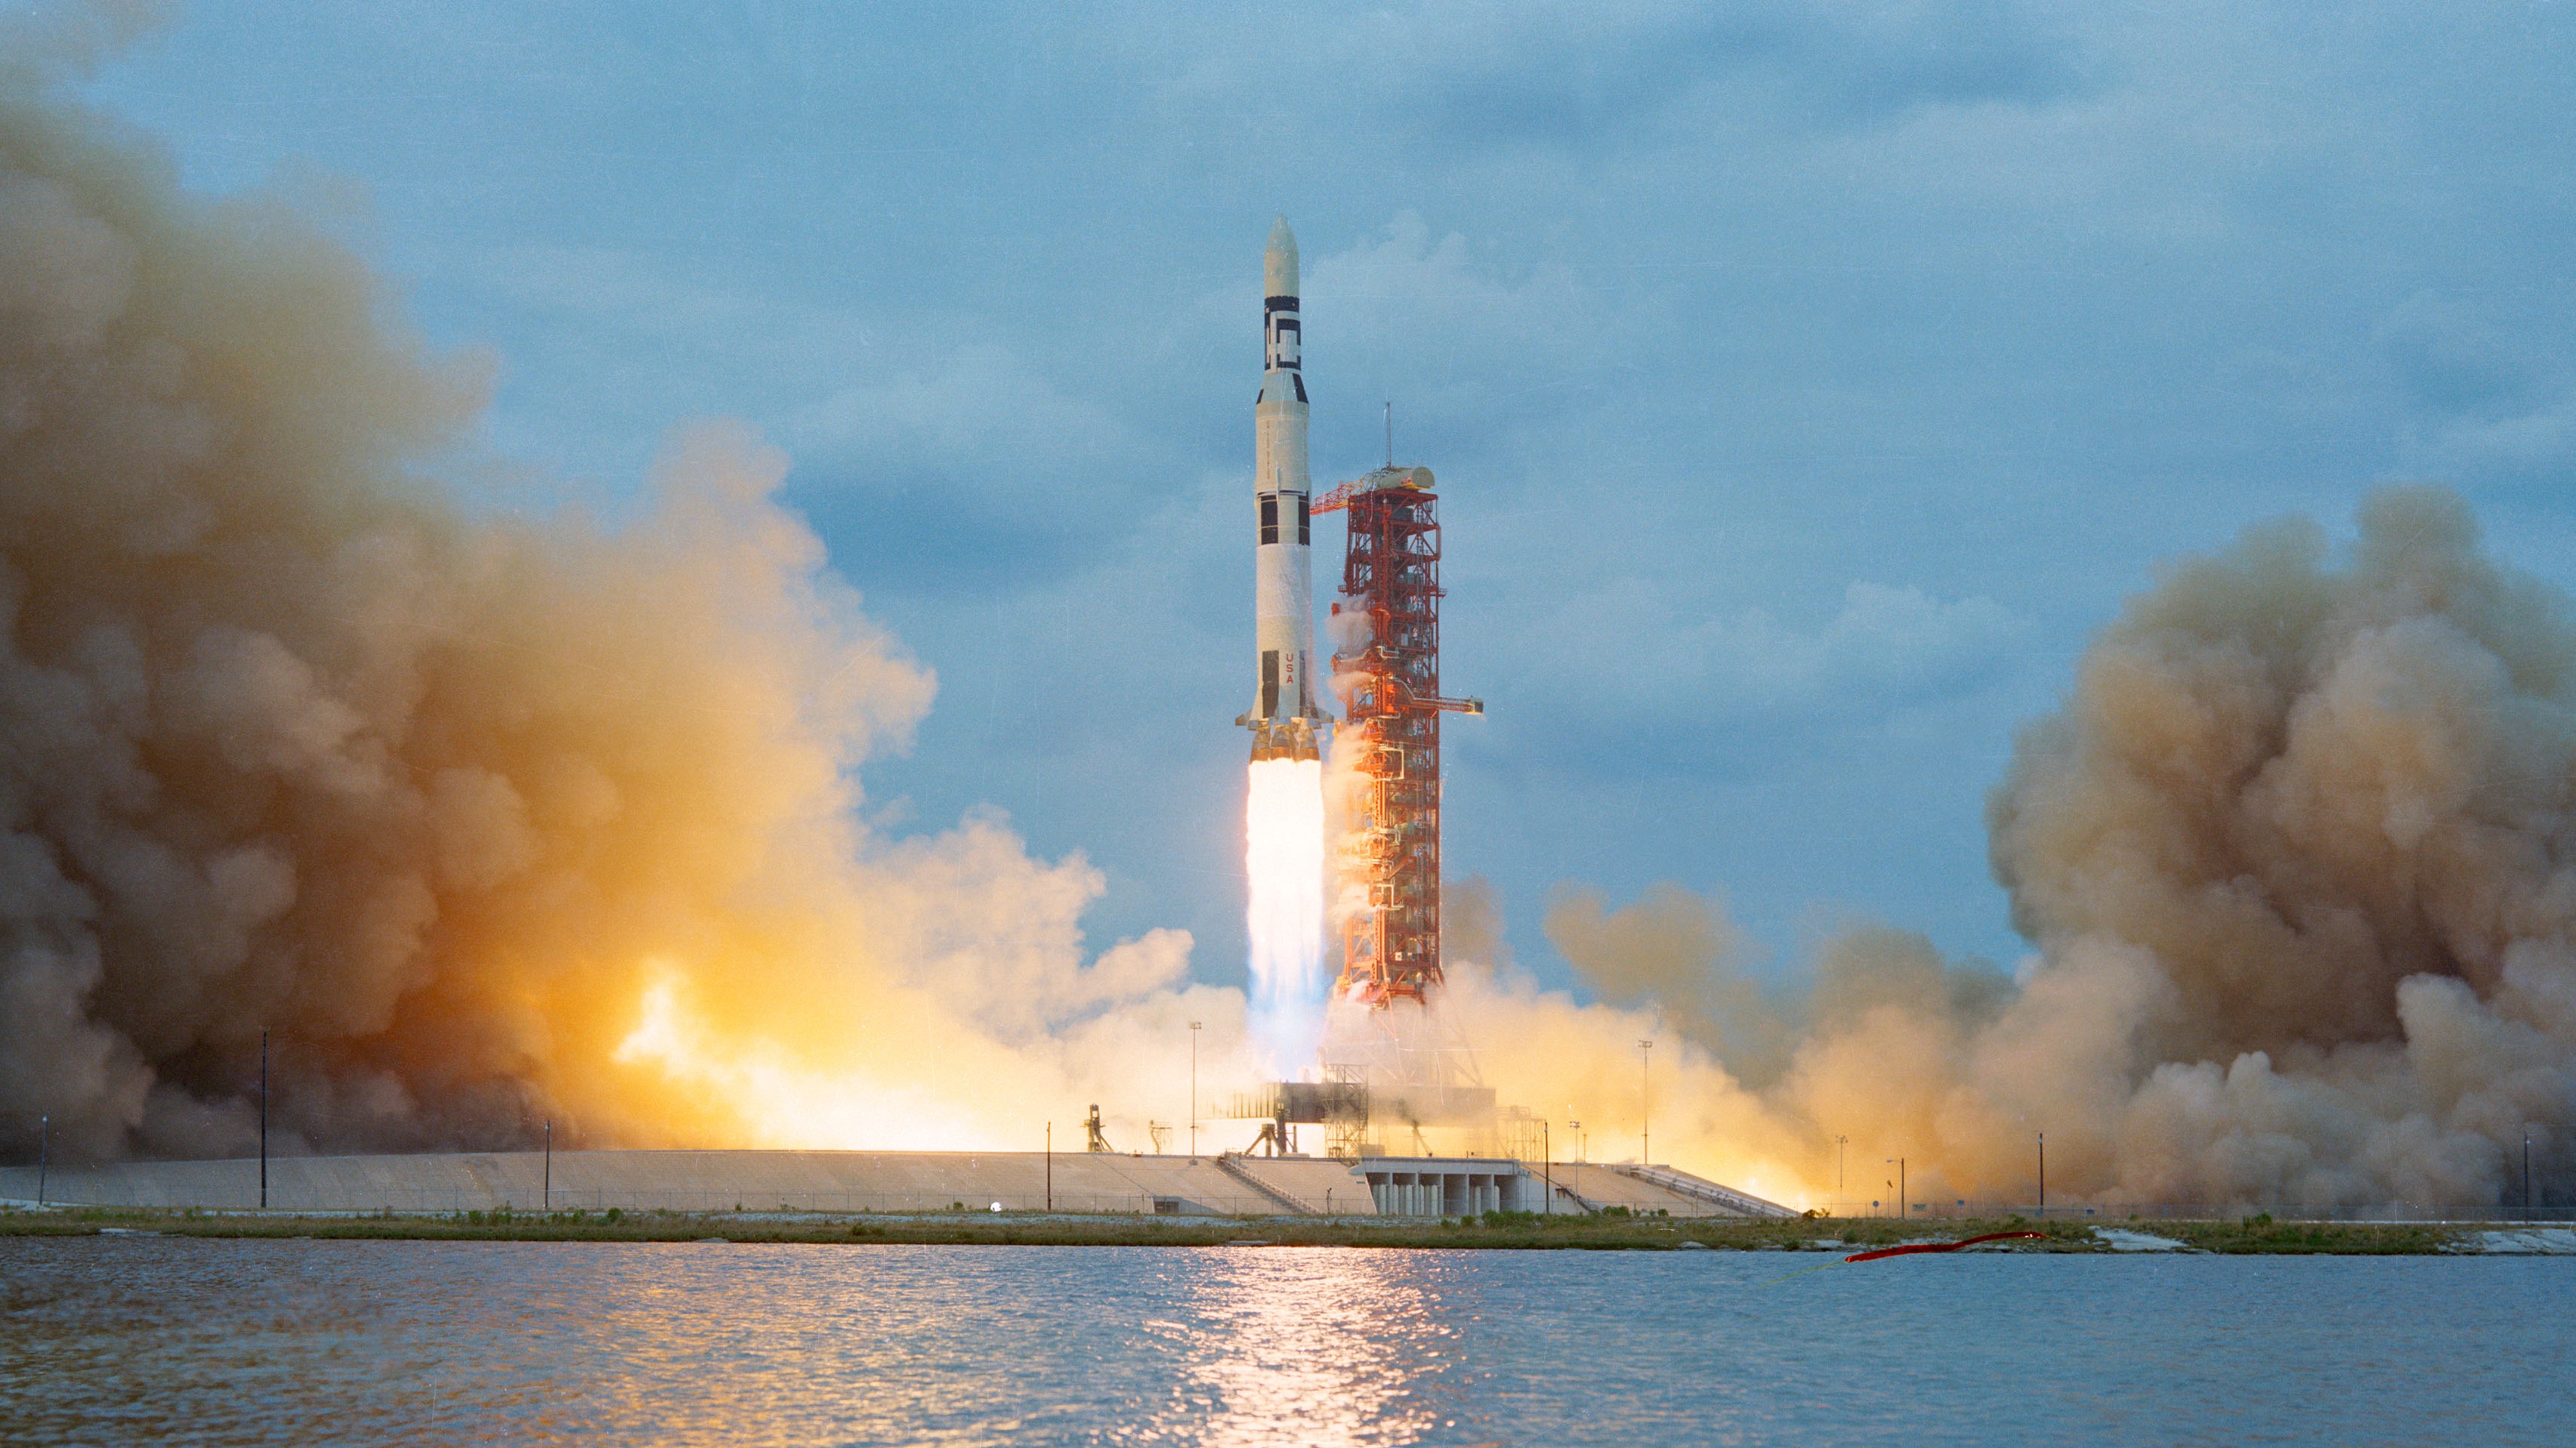 Saturn V: The mighty U.S. moon rocket